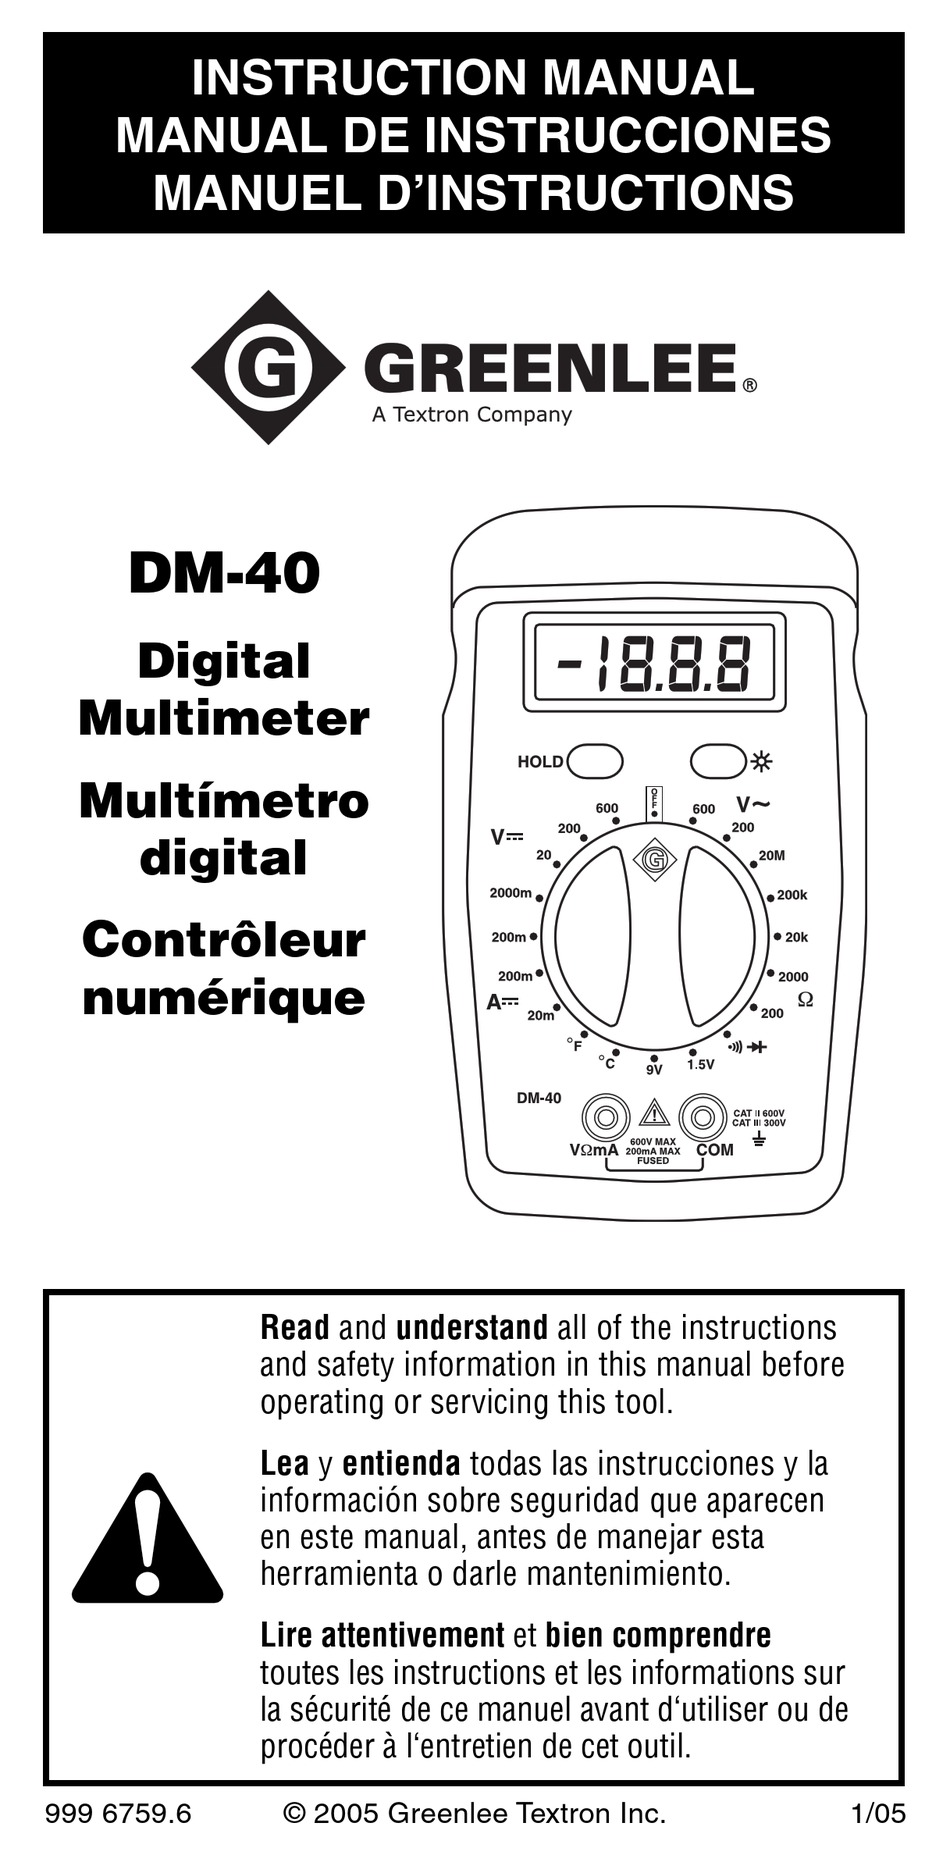 GREENLEE DM-40 INSTRUCTION MANUAL Pdf Download | ManualsLib